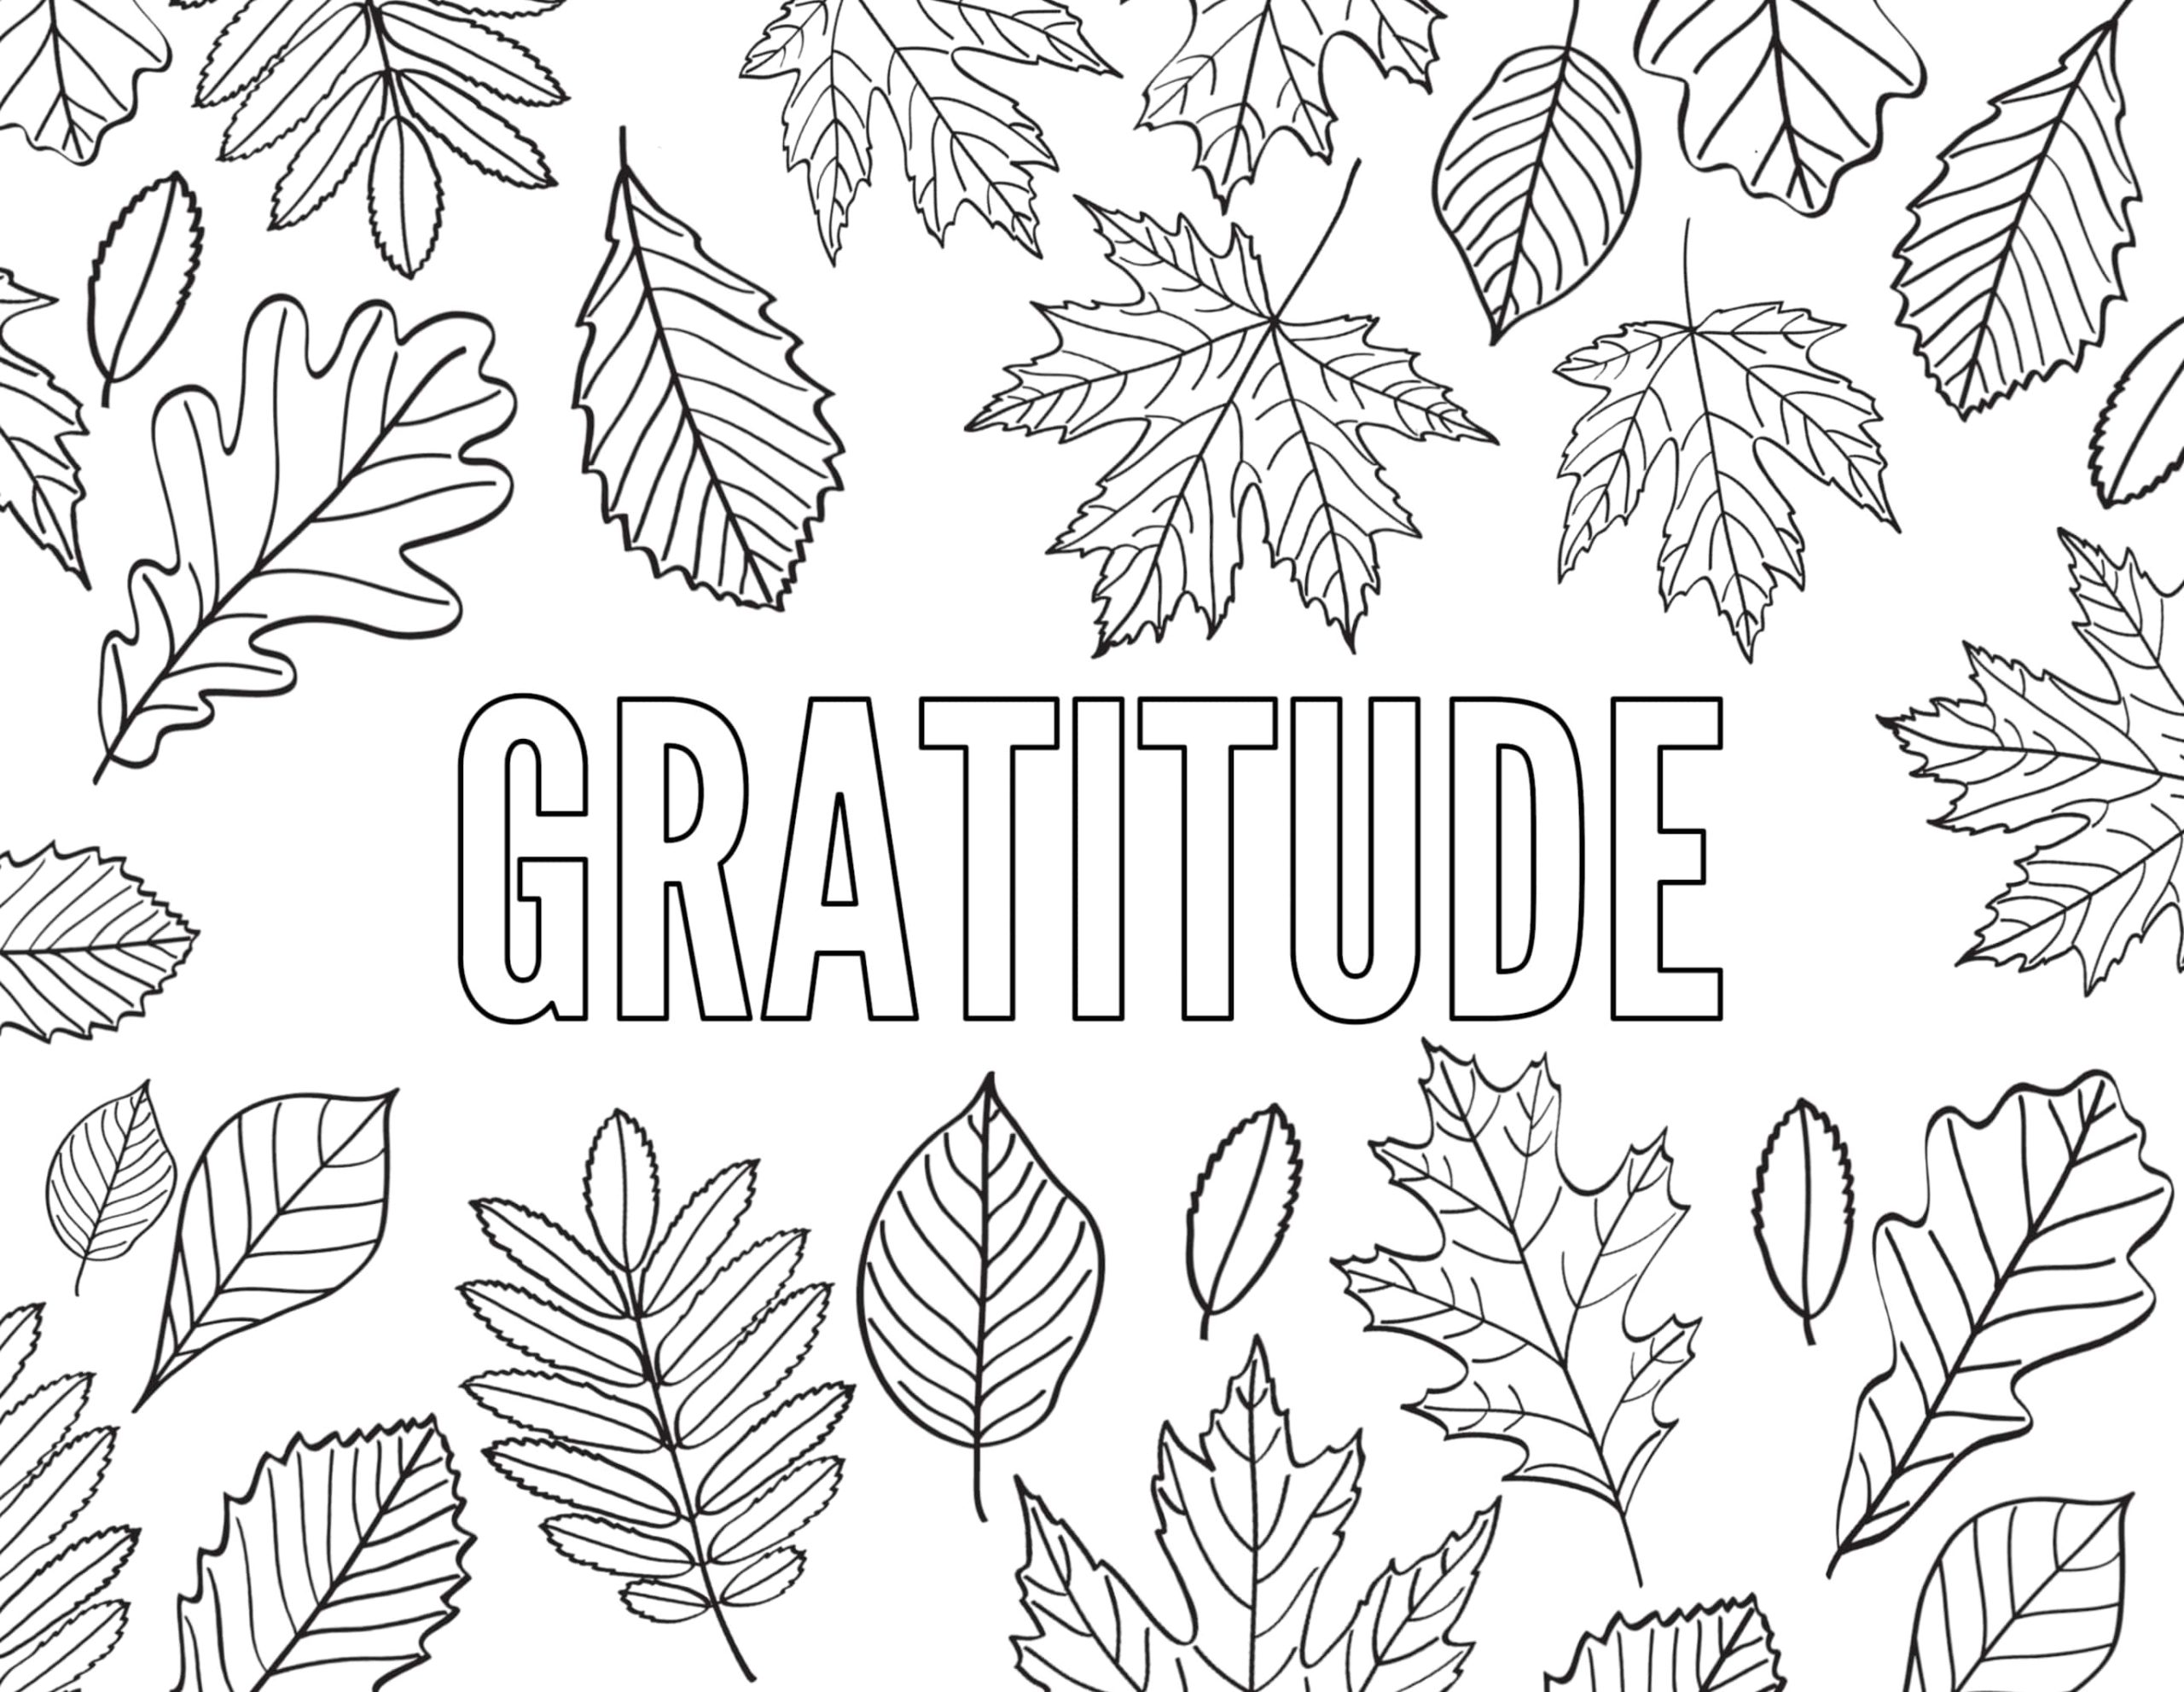 fun gratitude coloring pages | gratitude coloring pages mandala | gratitude coloring pages for adults